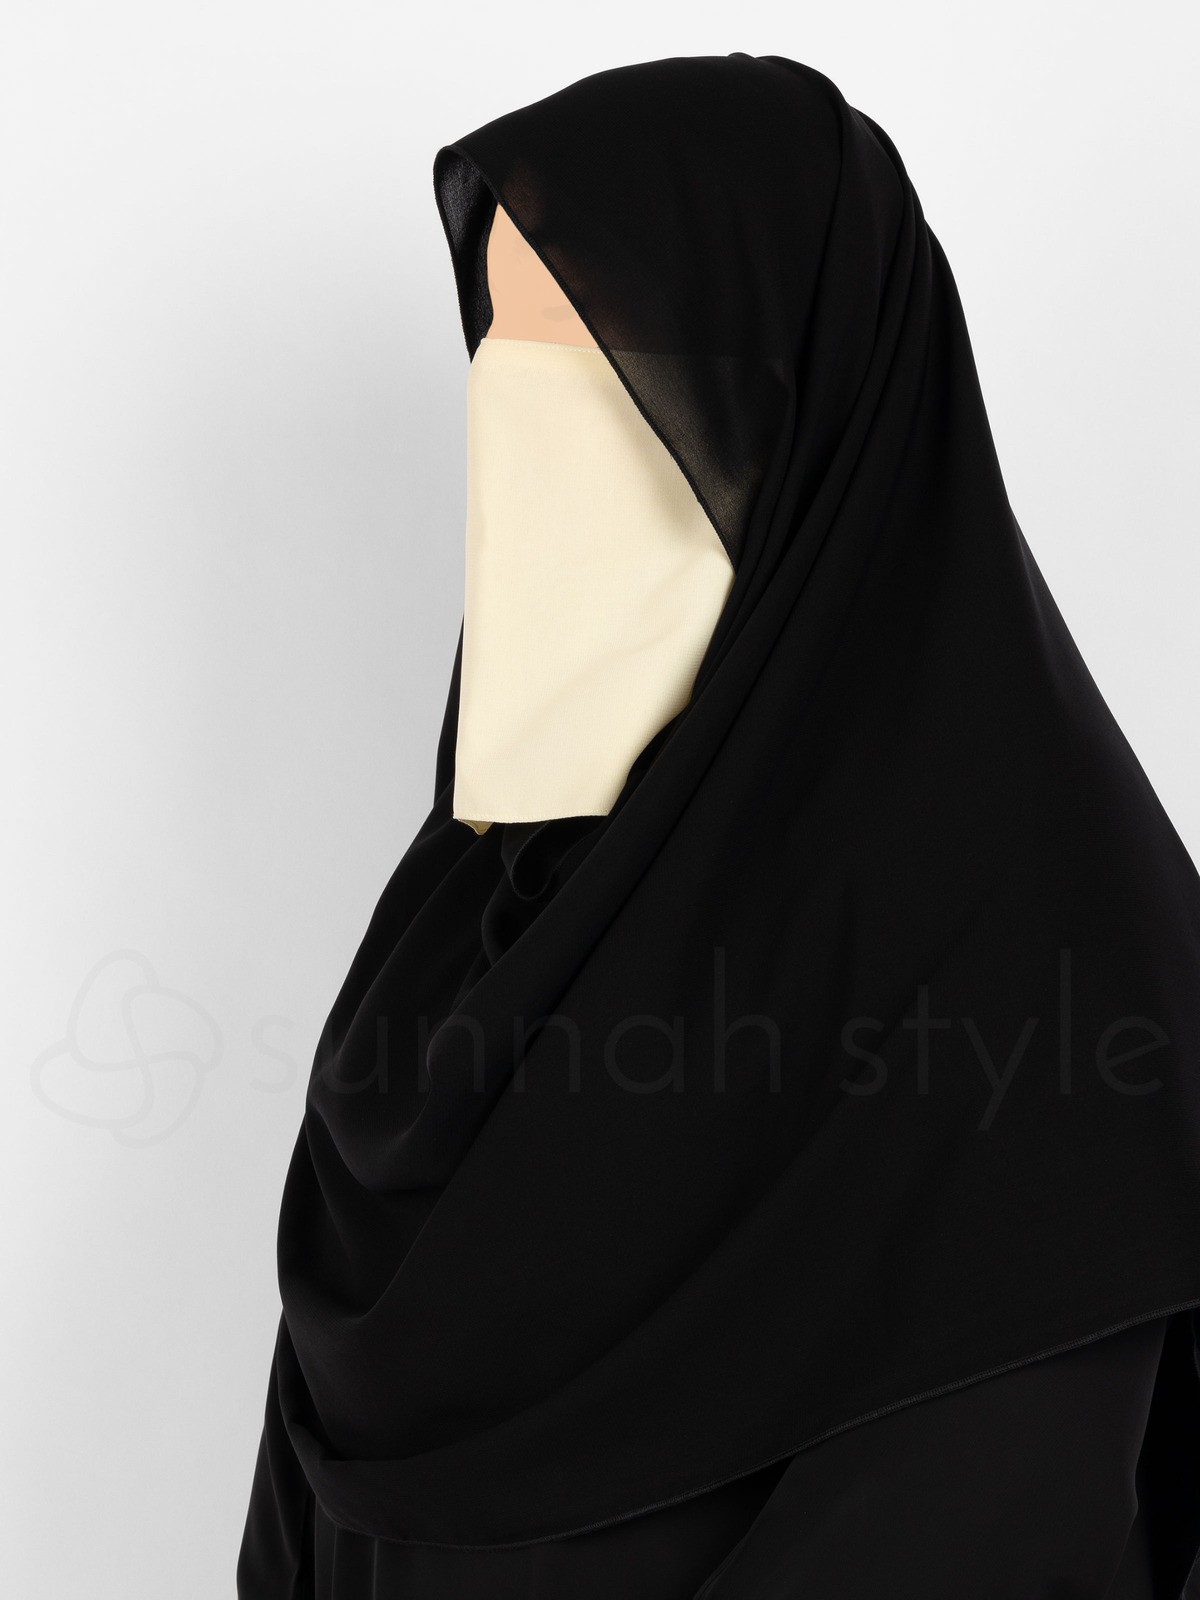 Sunnah Style - Short Elastic Half Niqab (Vanilla Cream)